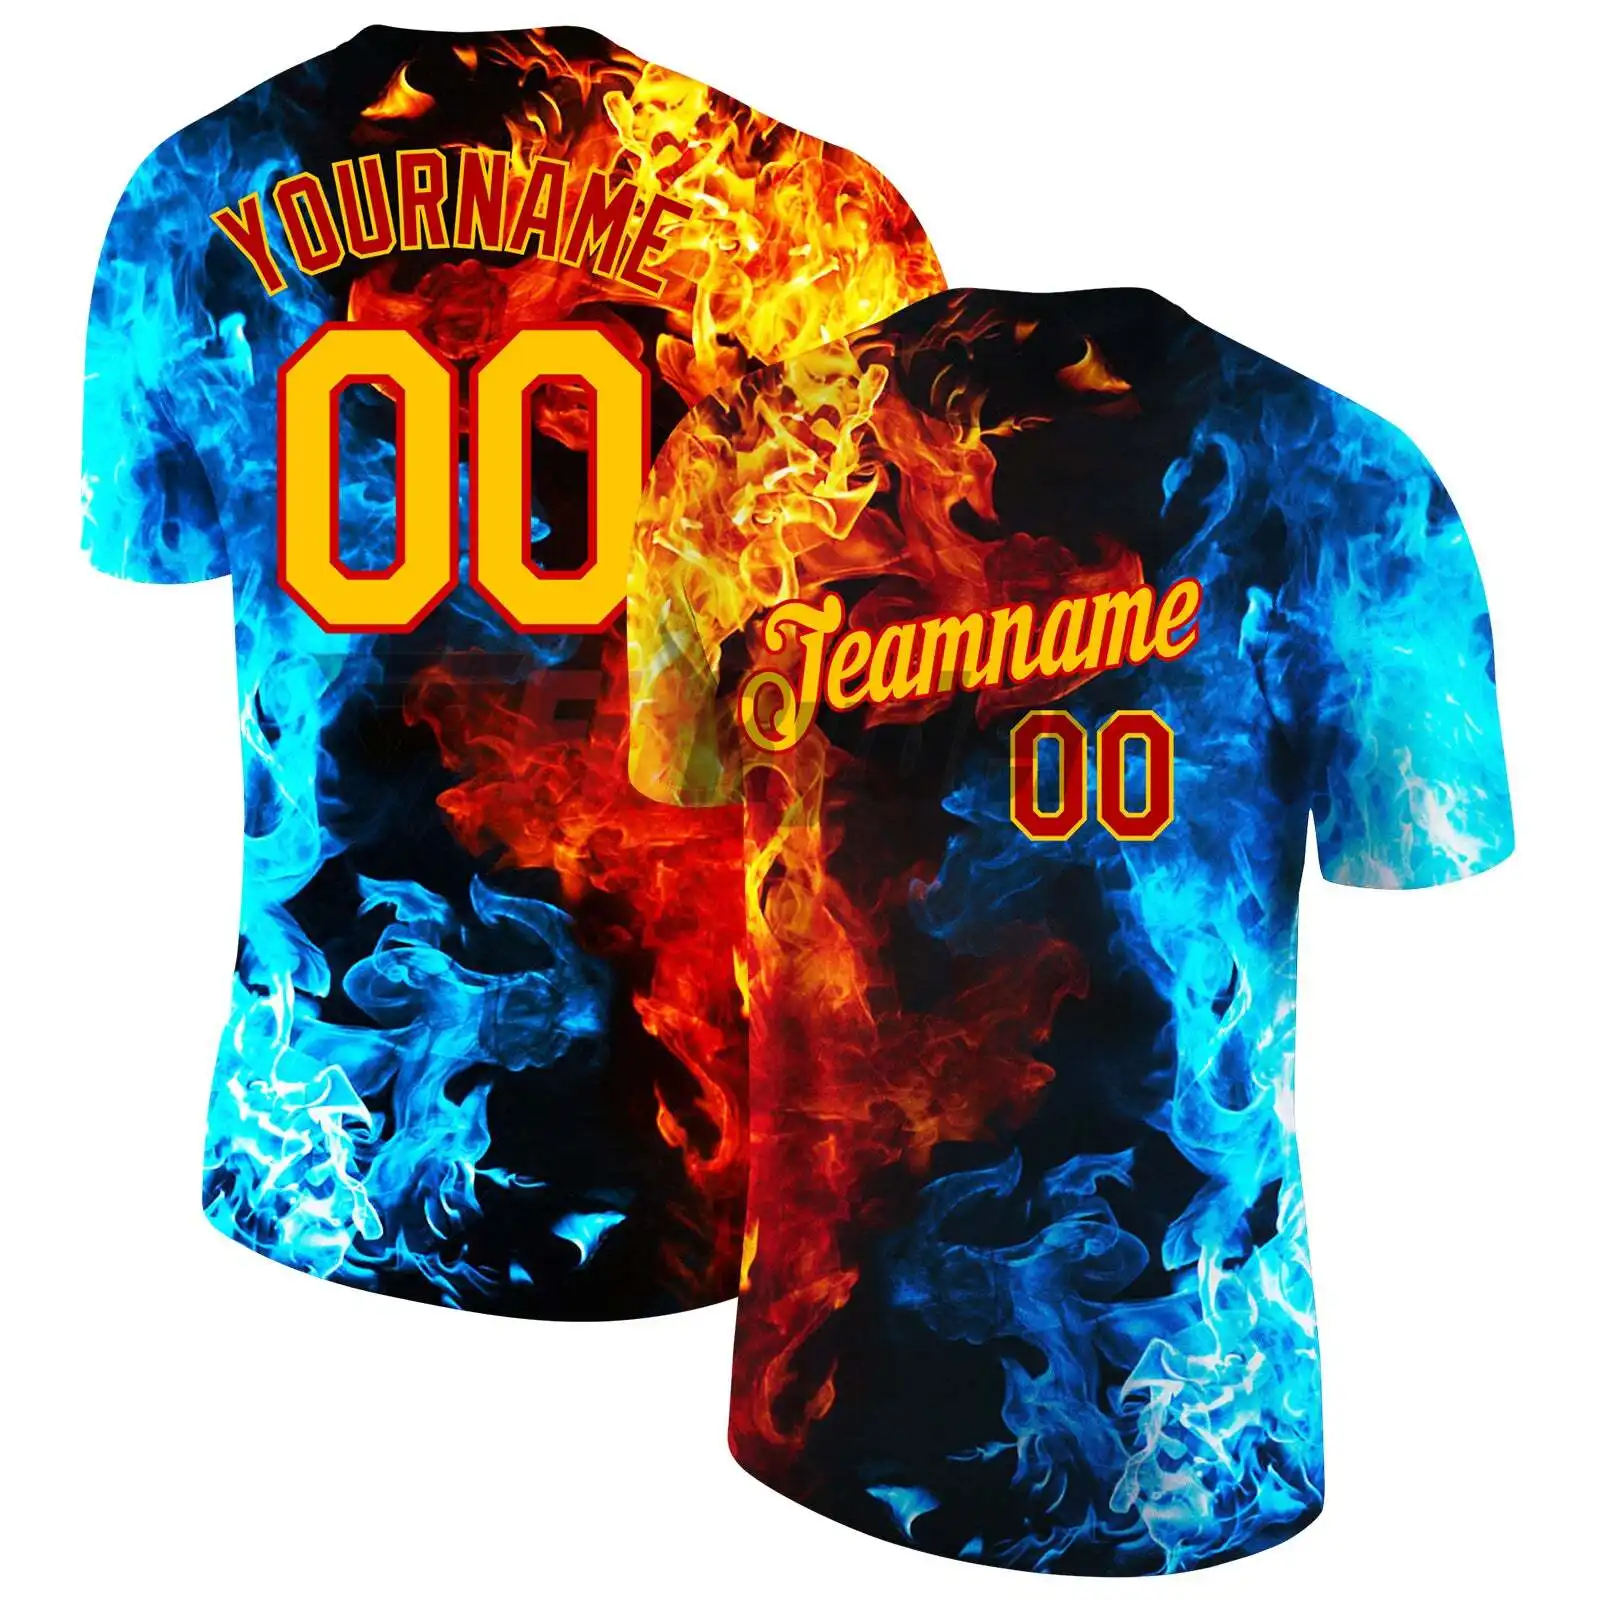 Beste Stijl Sublimatie Afdrukken T-Shirt Voor Mannen Hoge Kwaliteit Sport Sublimatie T-Shirts 100% Polyester Sneldrogende T-Shirts